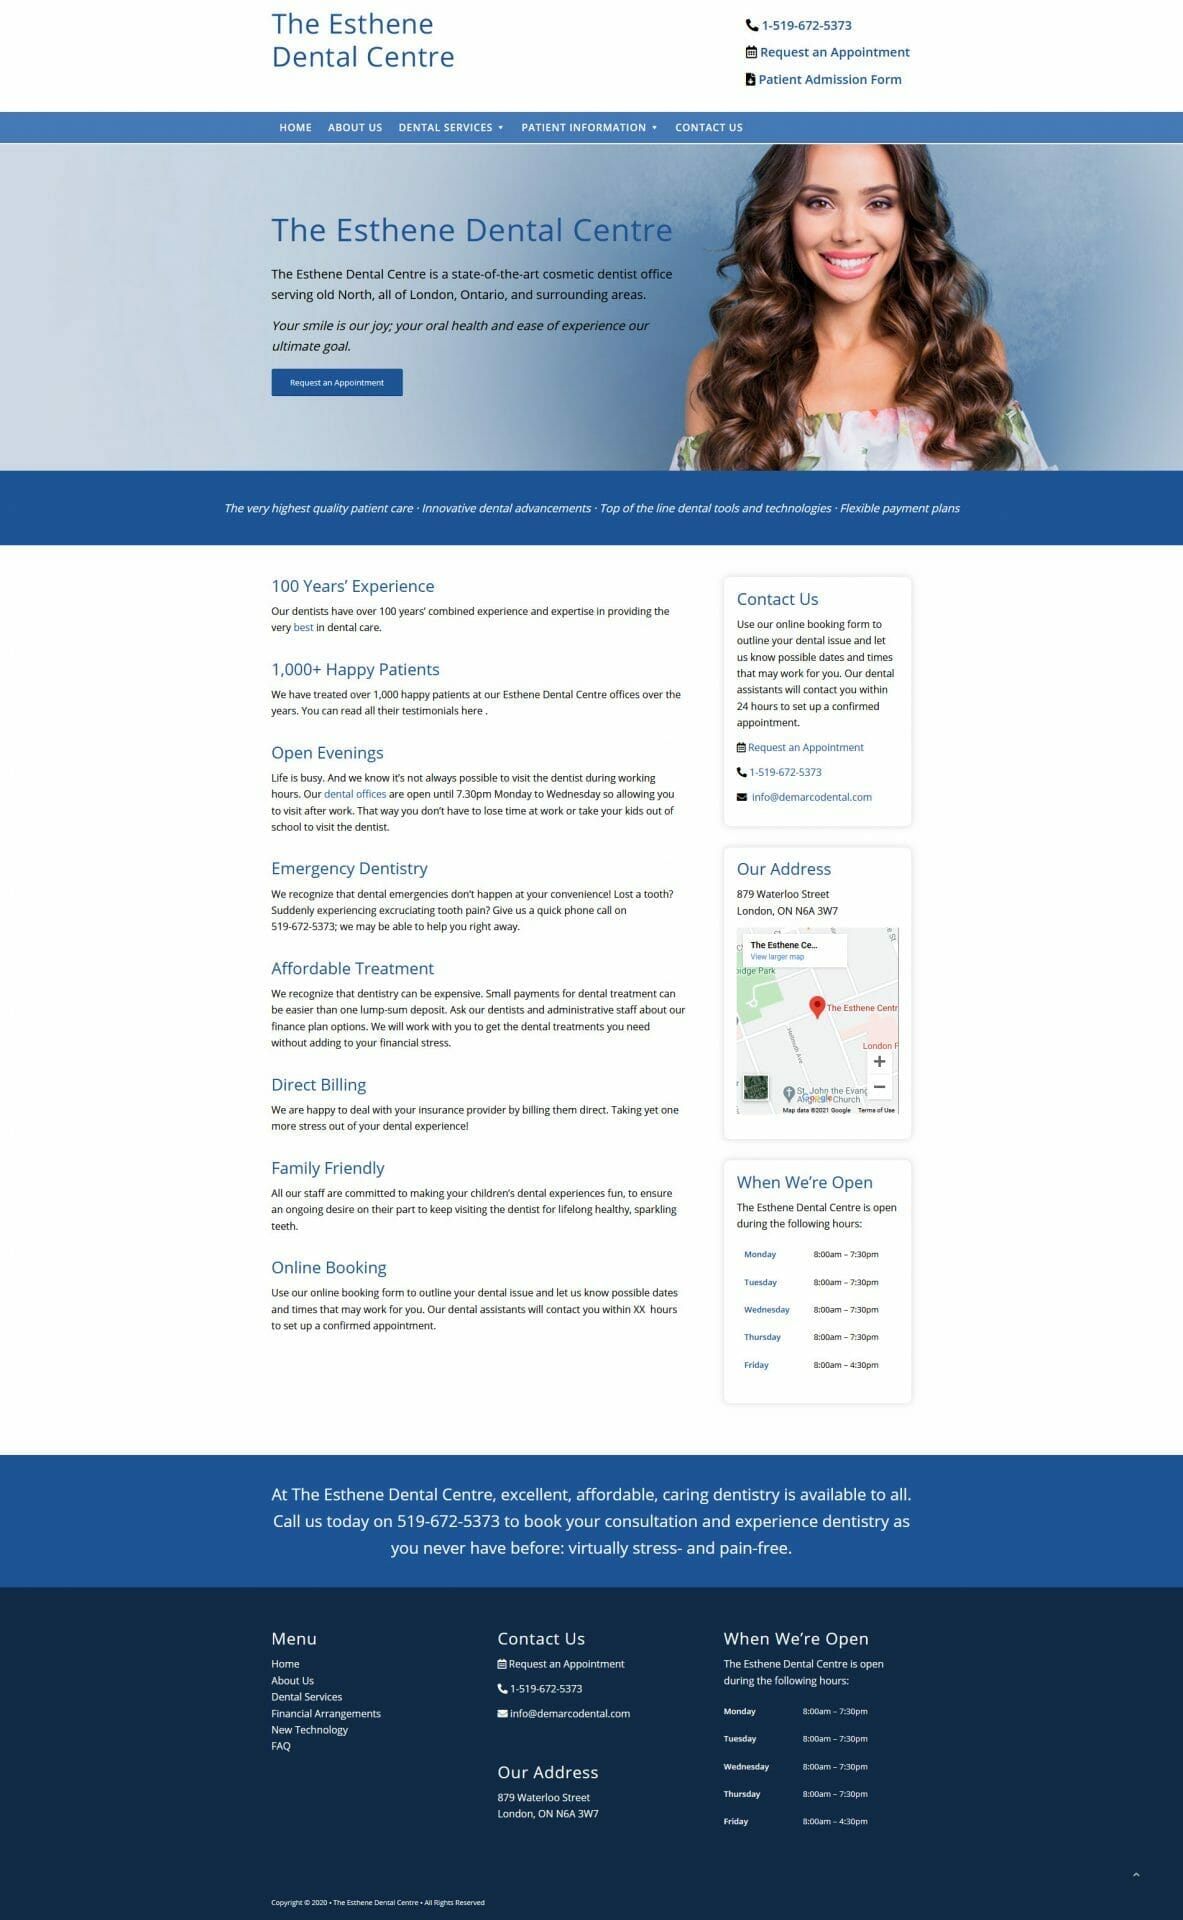 Screen shot of Esthene Dental Centre home web page